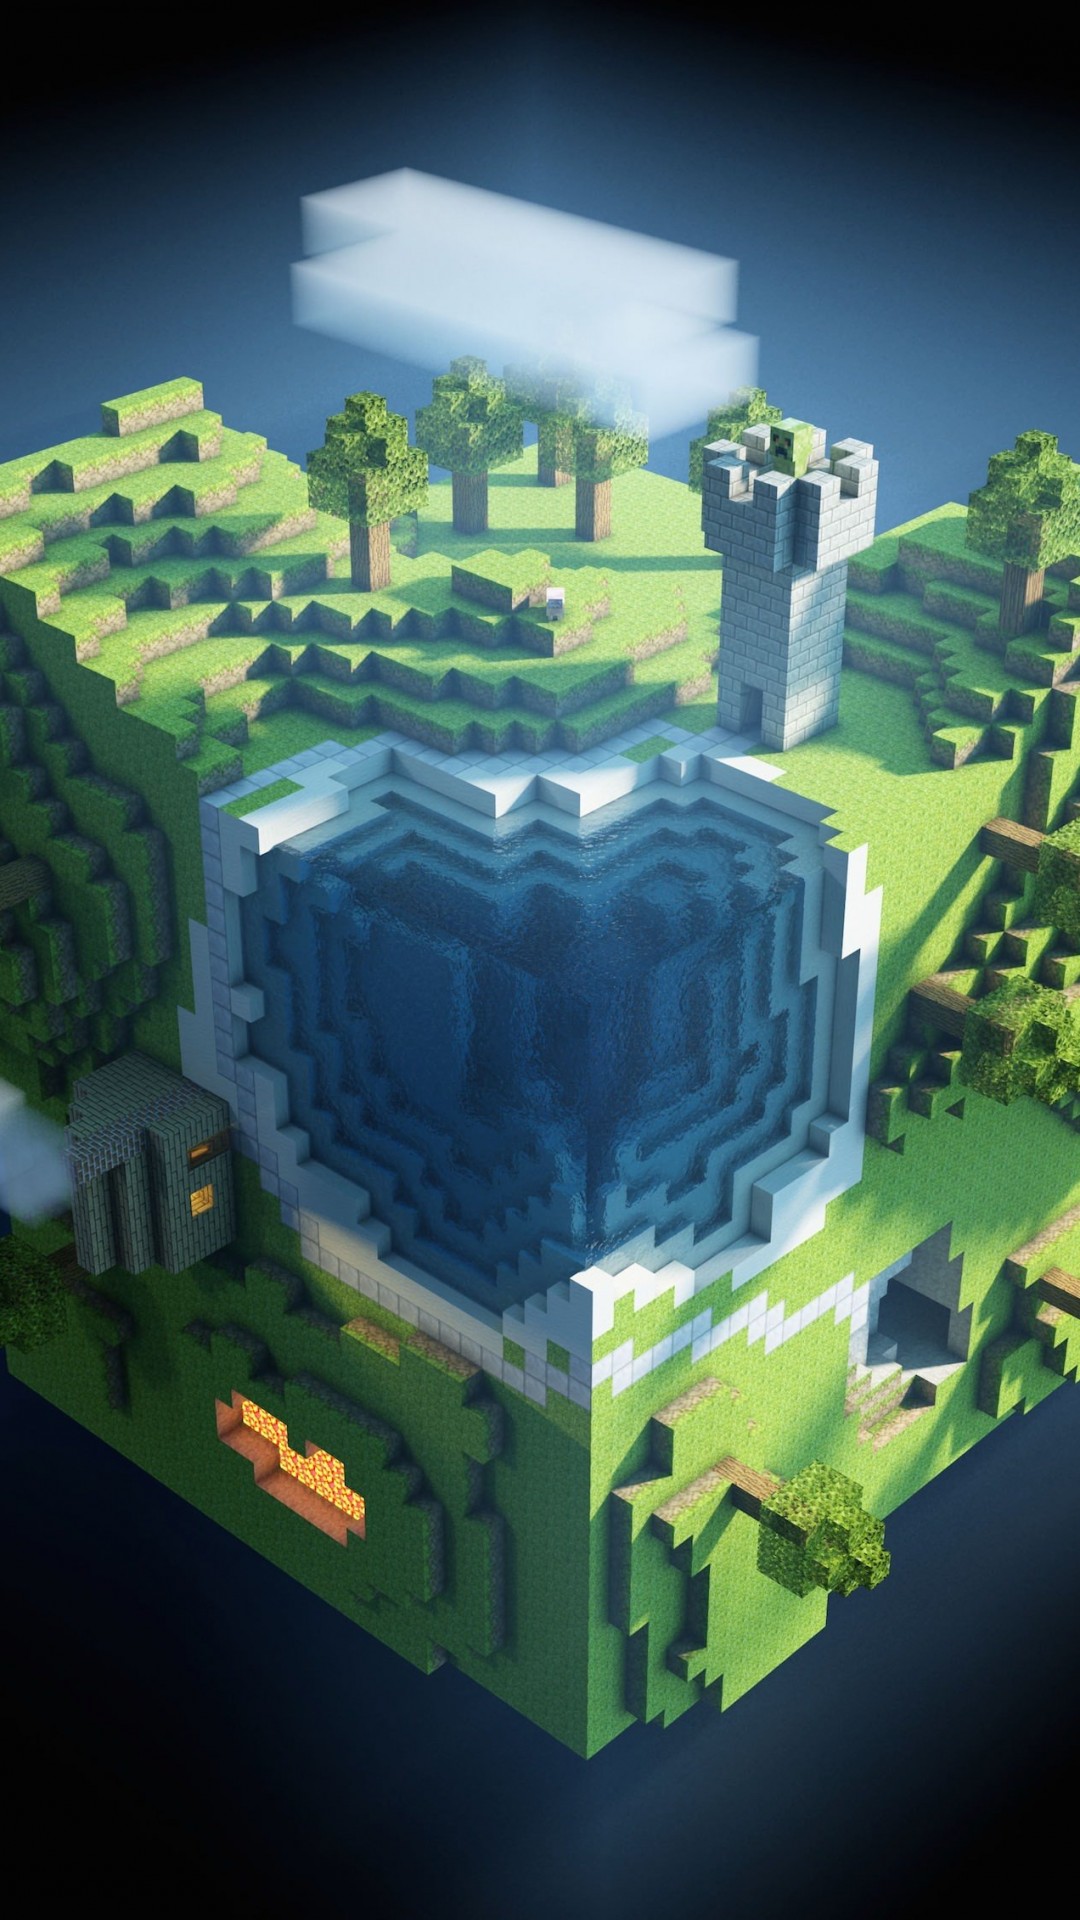 Planet Minecraft Wallpaper for Google Nexus 5X